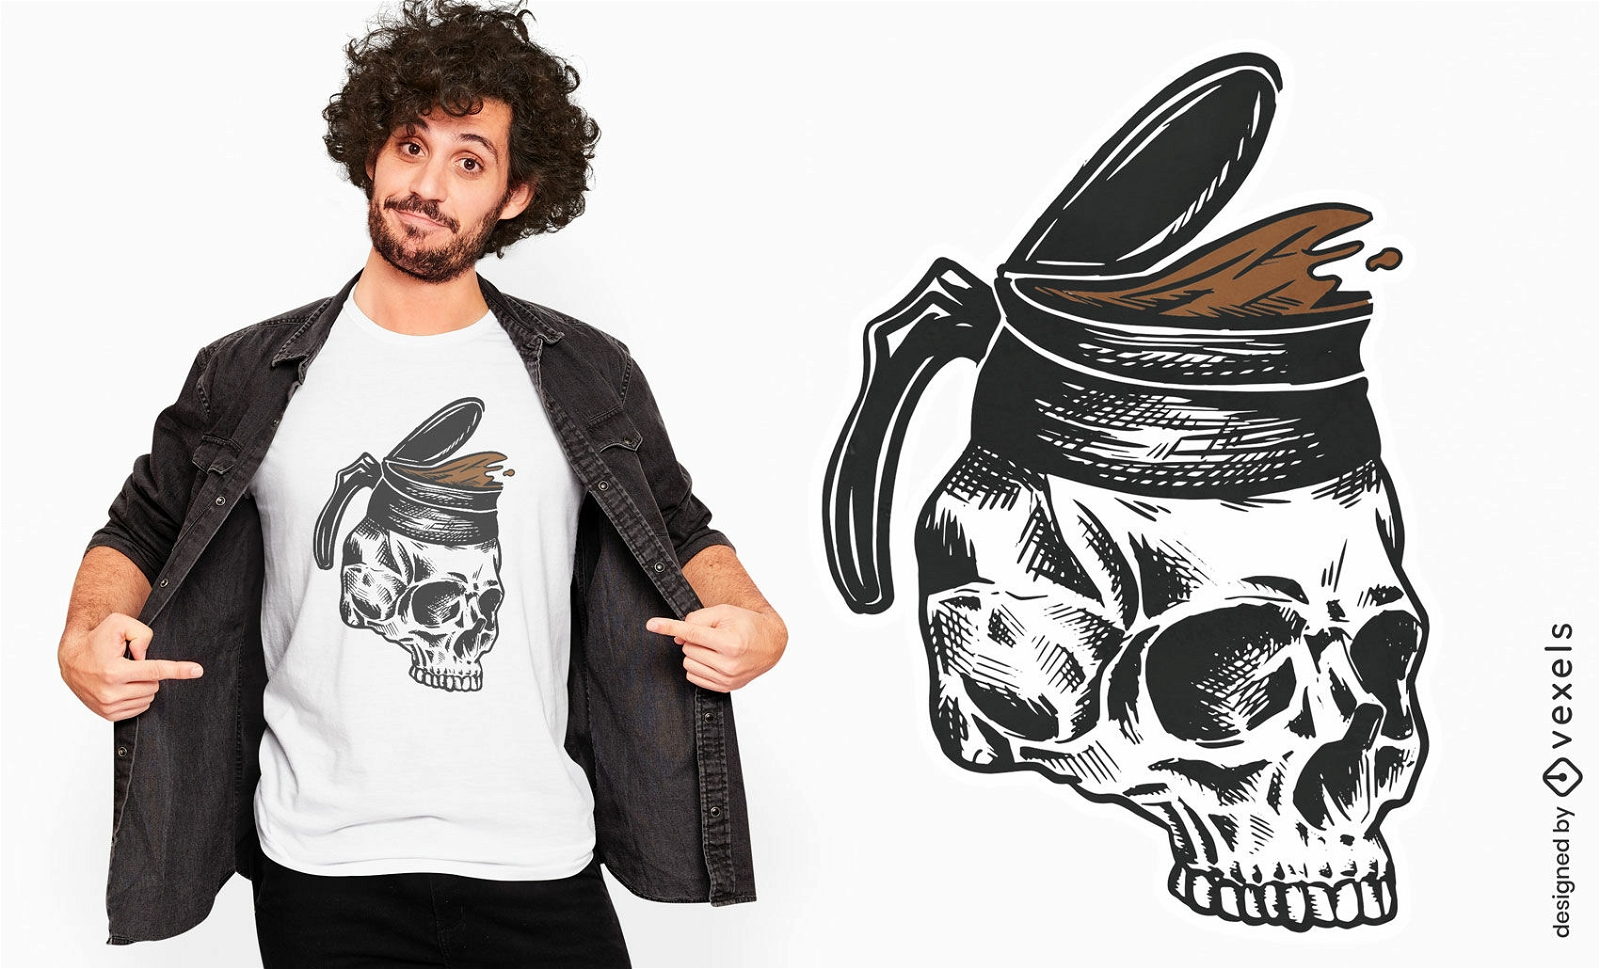 Skeleton coffee maker t-shirt design